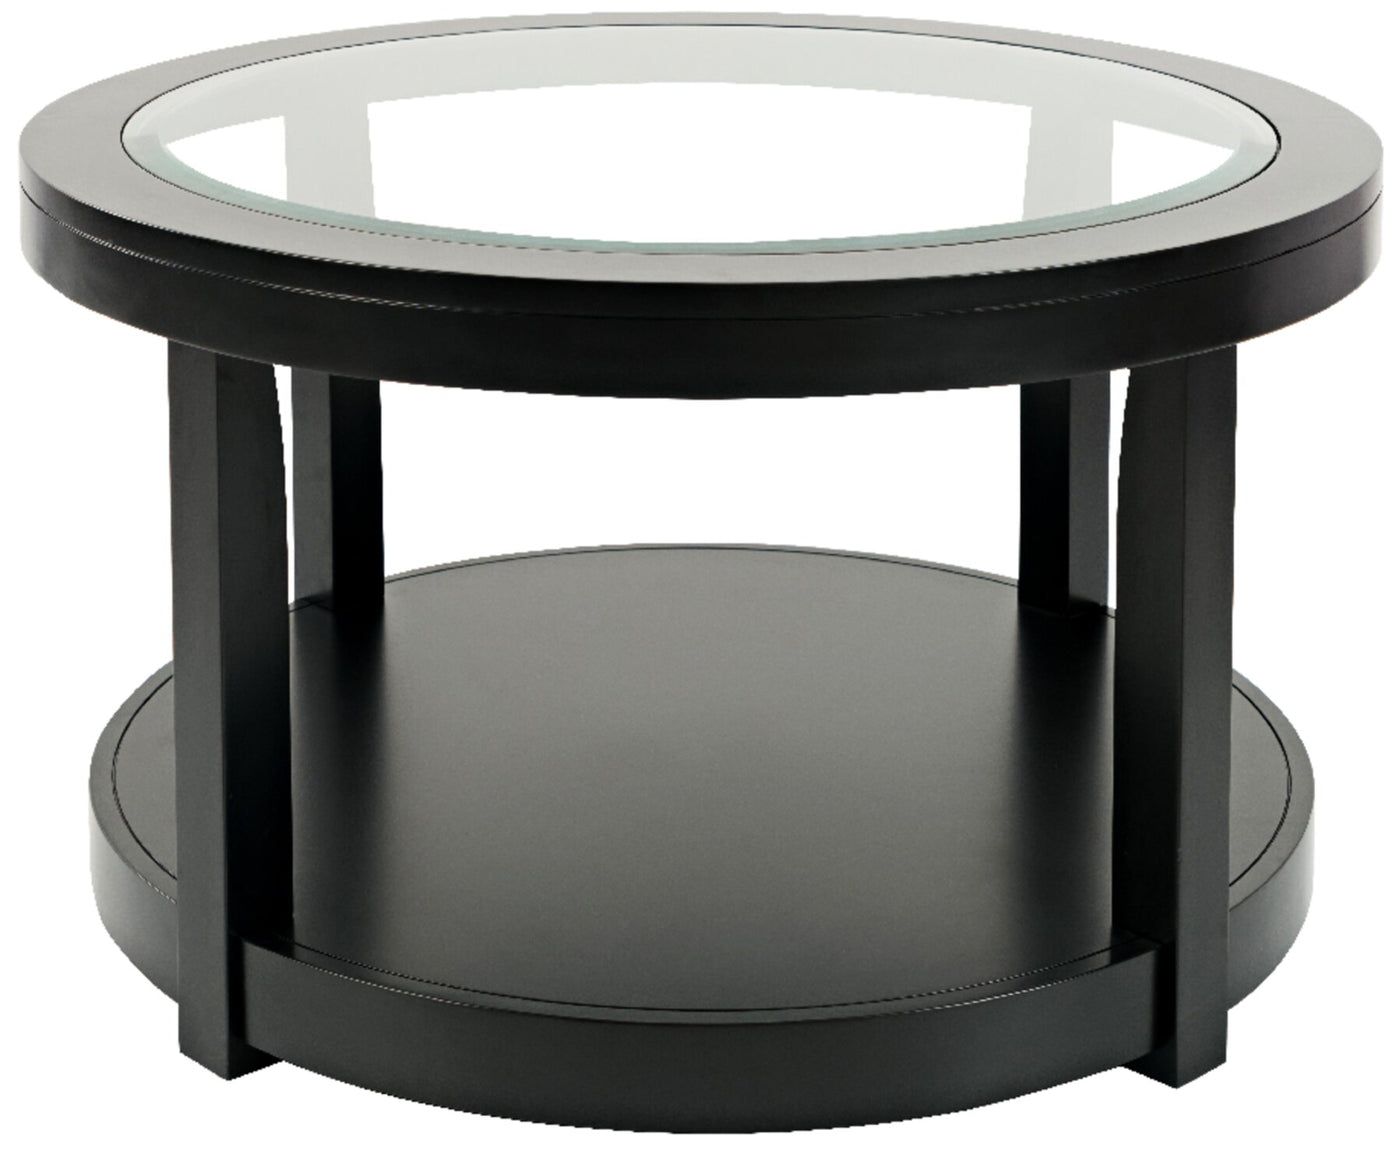 Corey Round Coffee Table – Black | The Brick Intended For Full Black Round Coffee Tables (View 19 of 20)